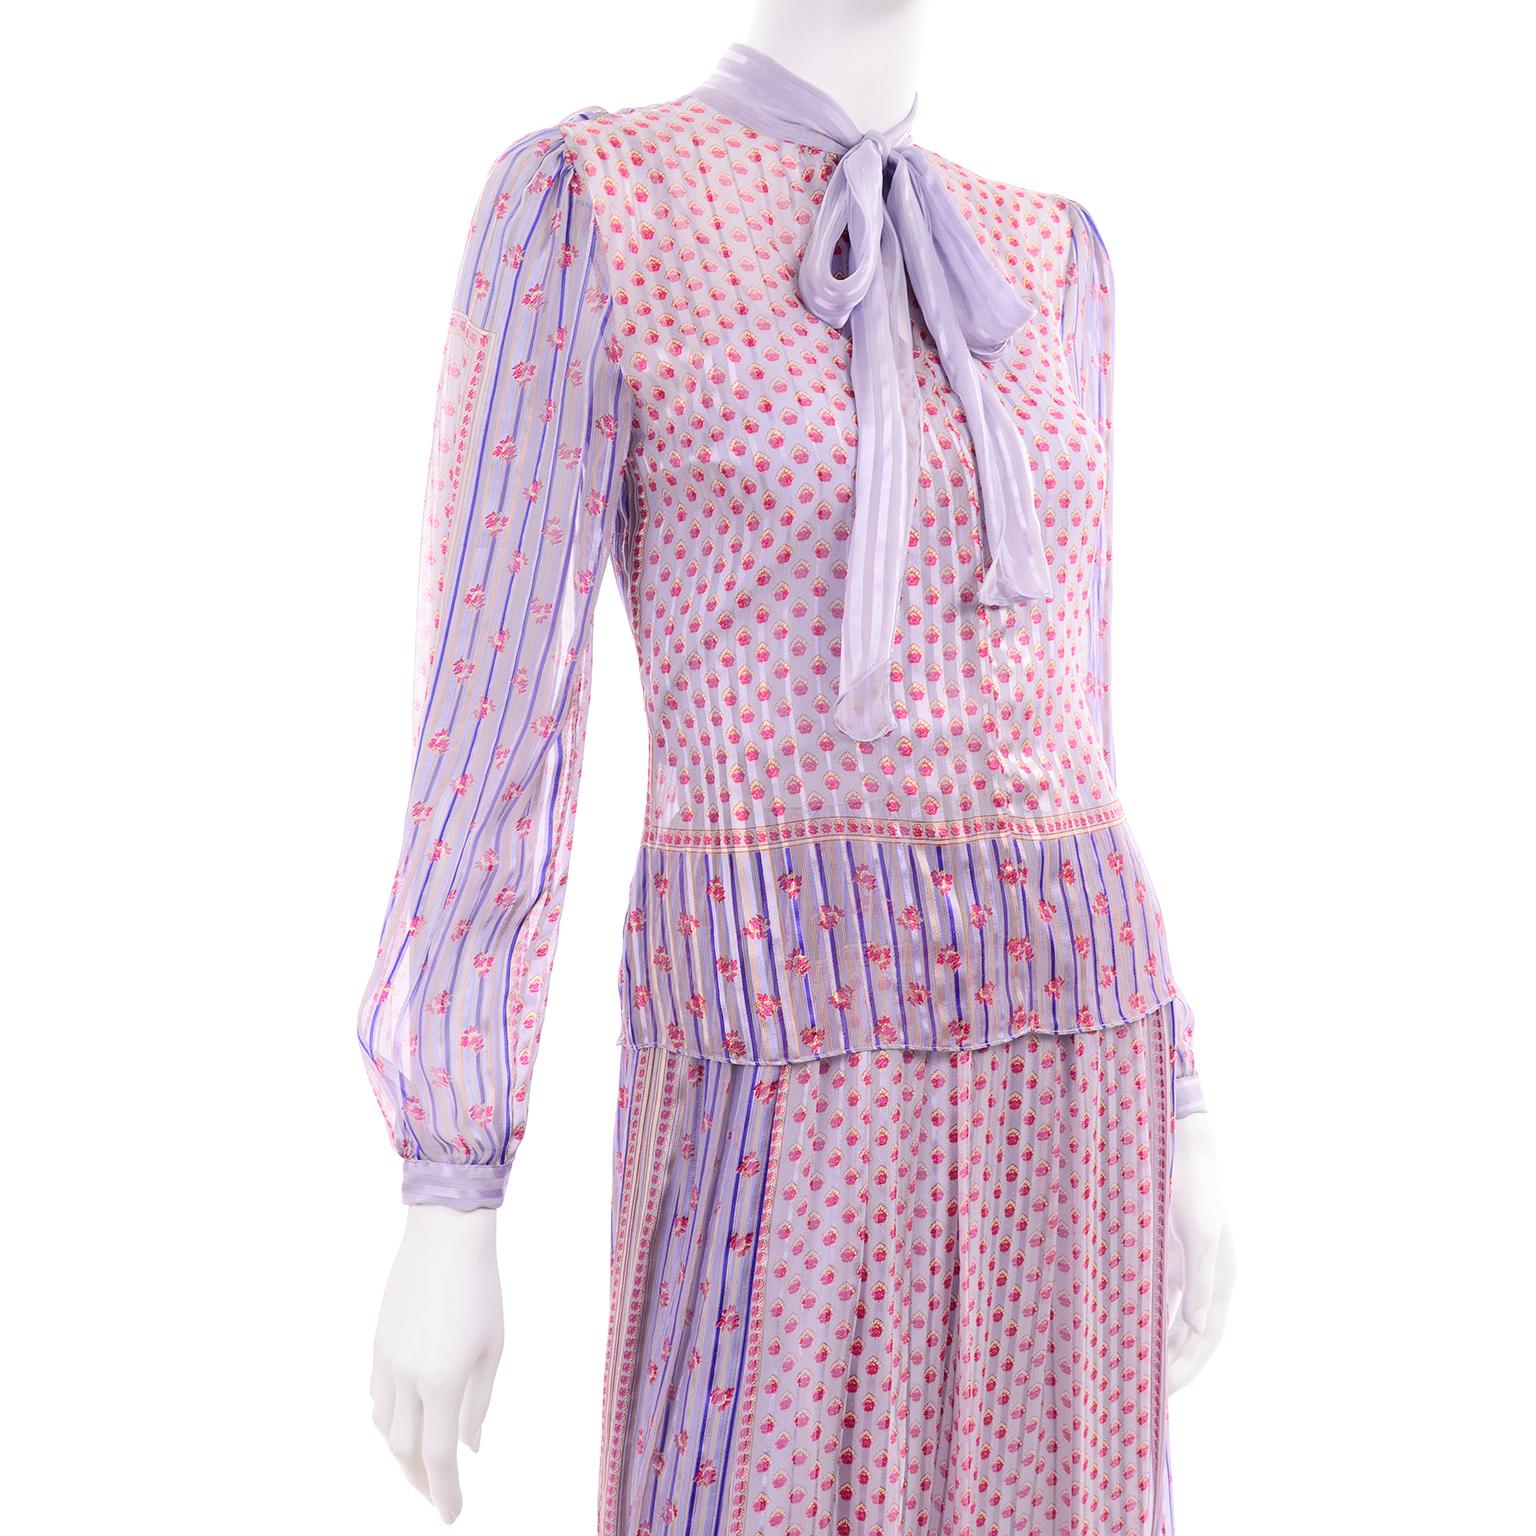 Designer Silk Chiffon 2 Pc Dress in Purple Yellow Pink Floral Print Pattern Mix 7